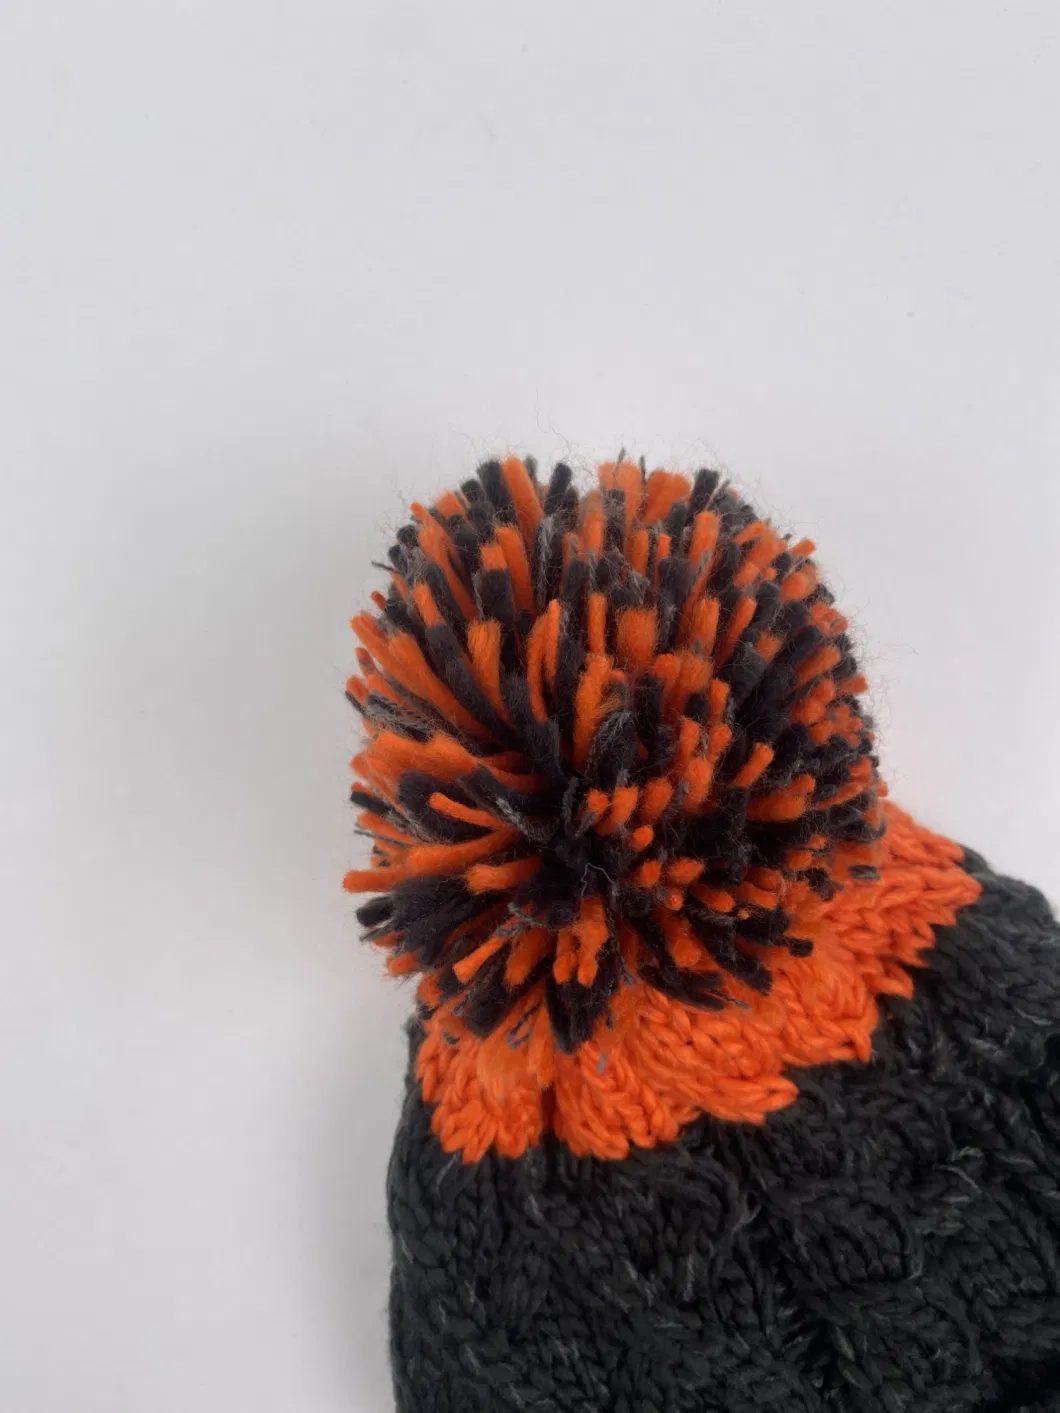 Quality Customized Brand Melange Yarn with Pompom Stretch Knitted Hat